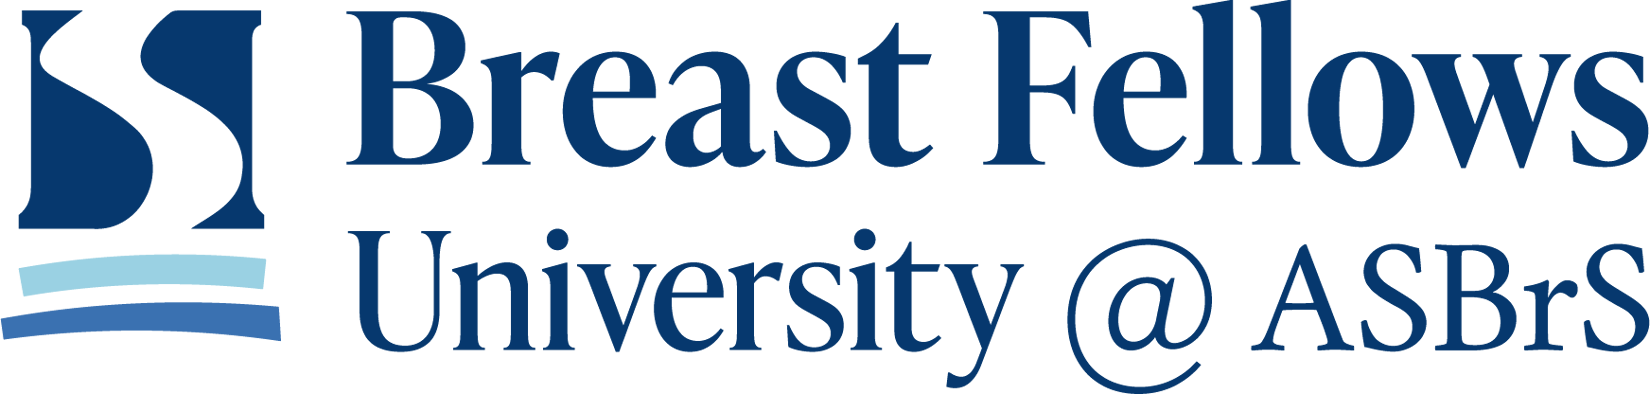 Breast Fellows University Banner